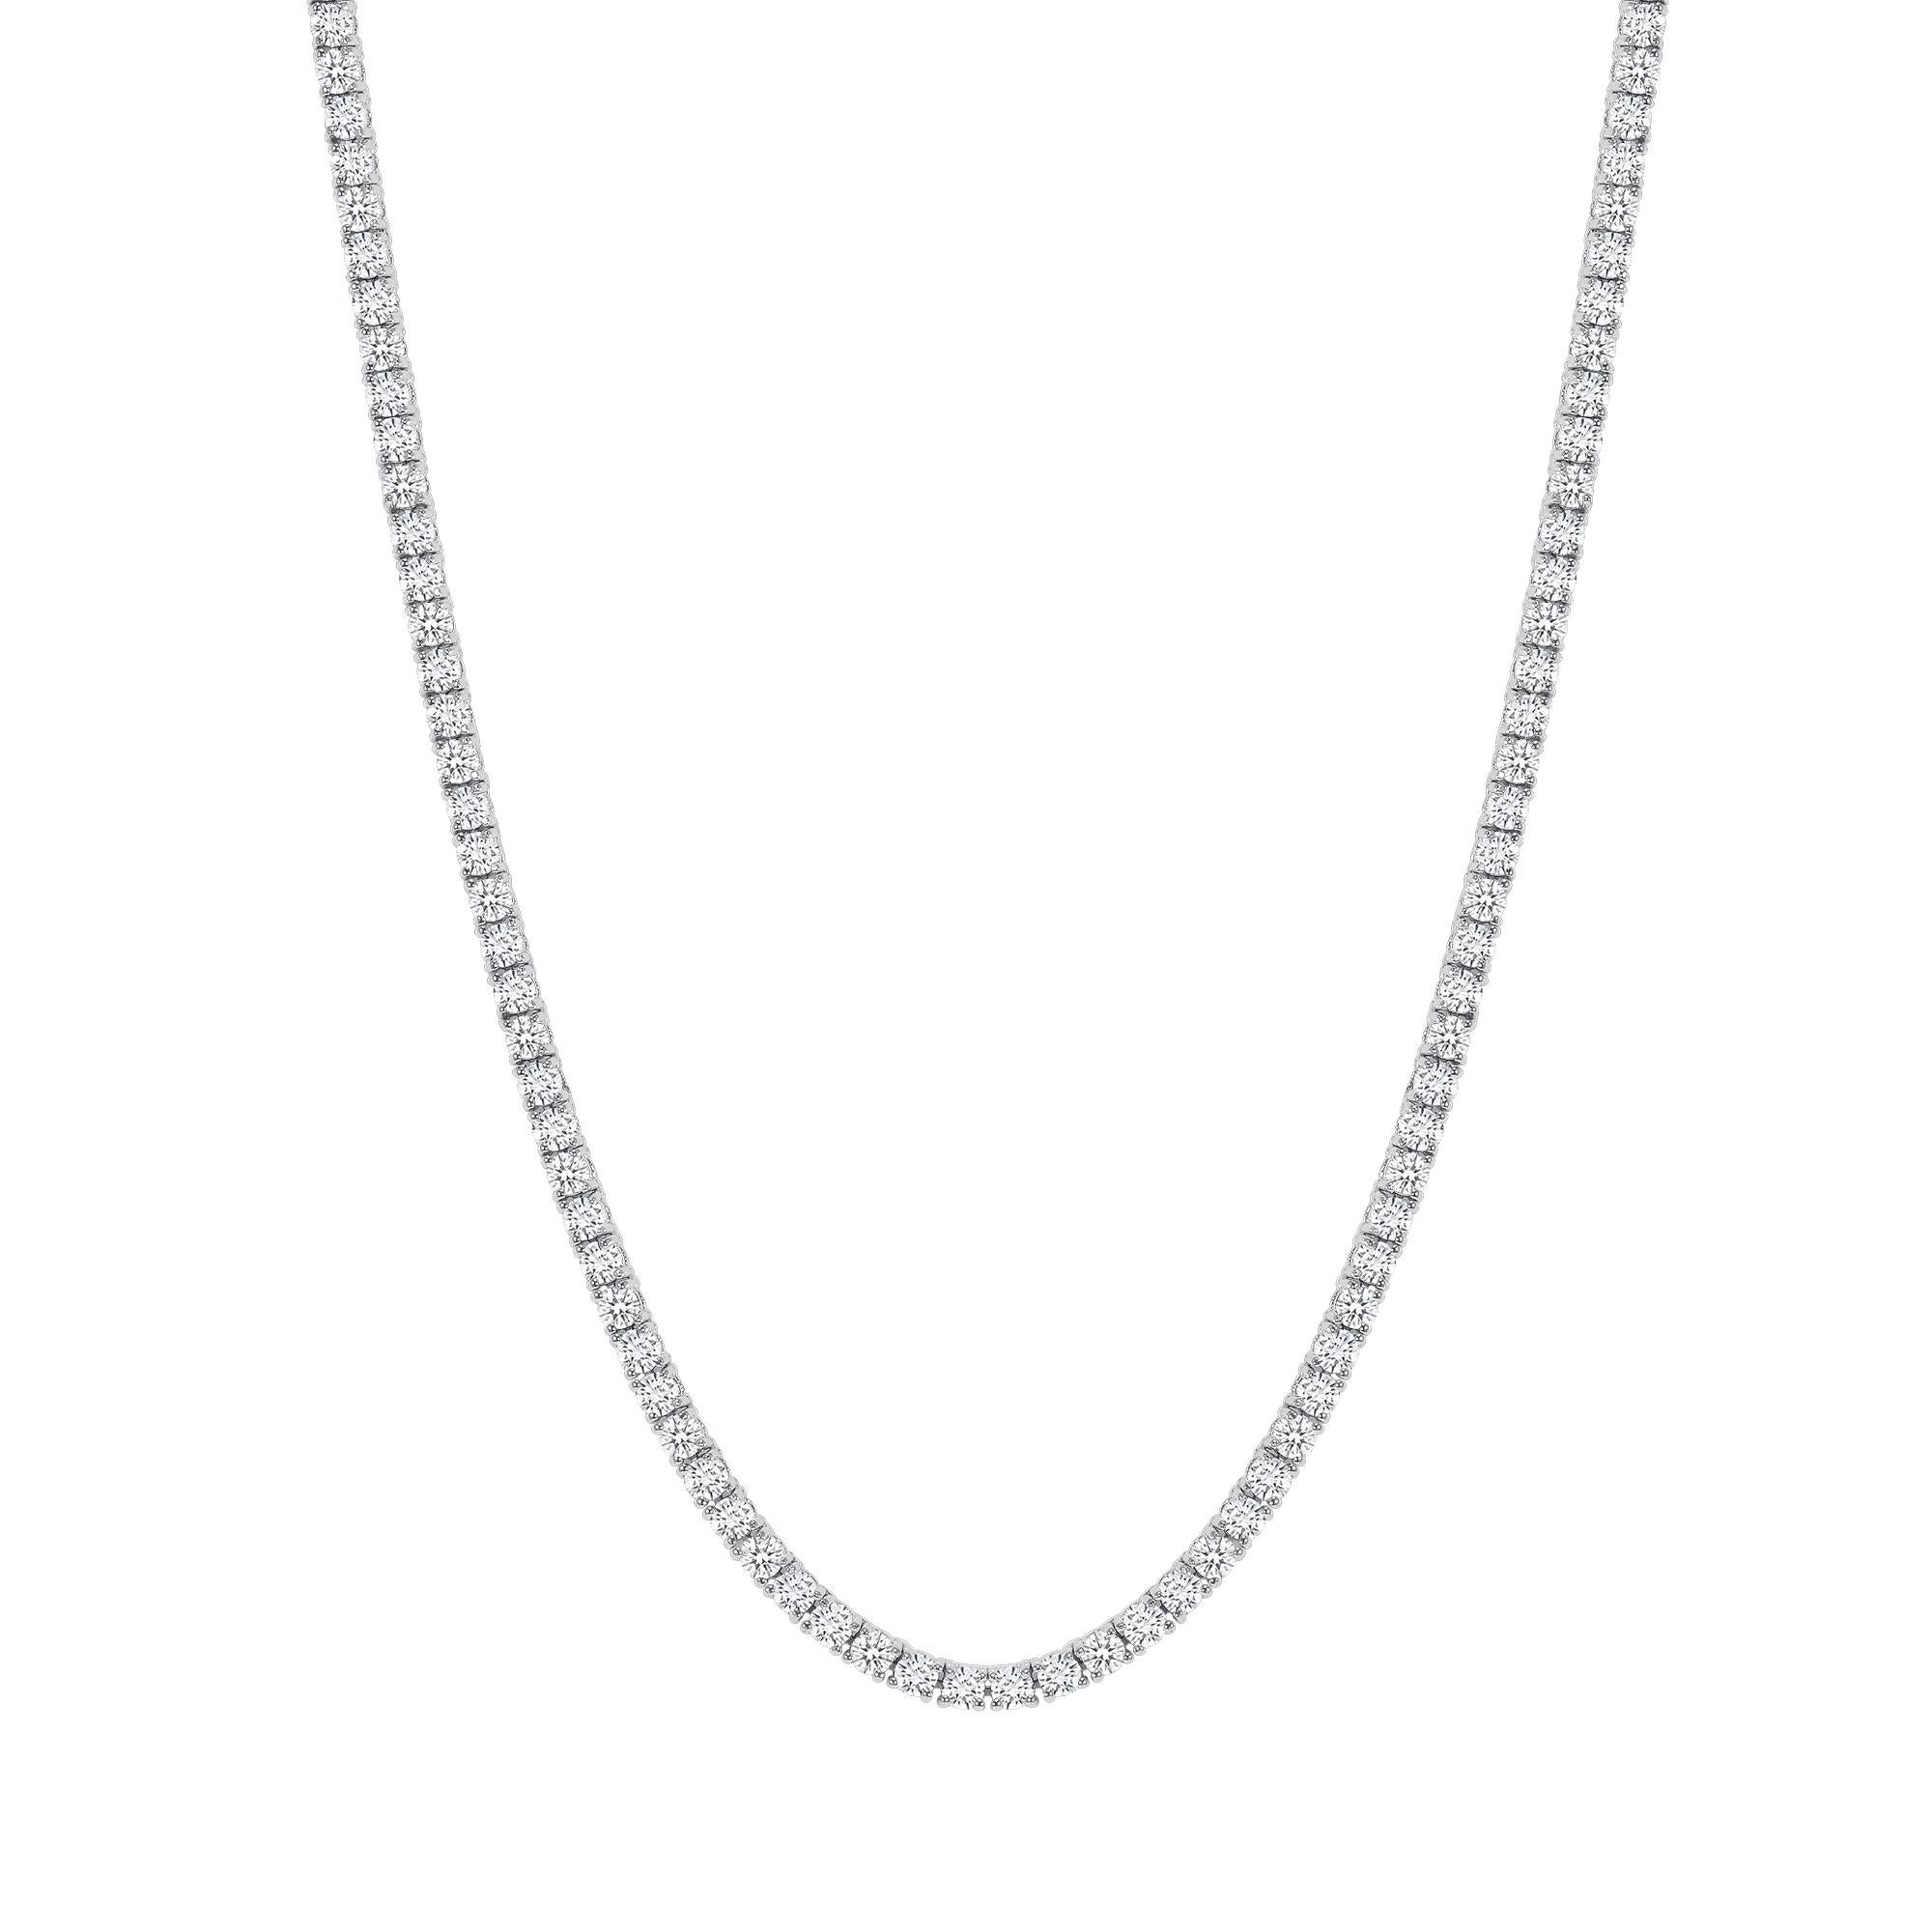 5 ct diamond tennis necklace